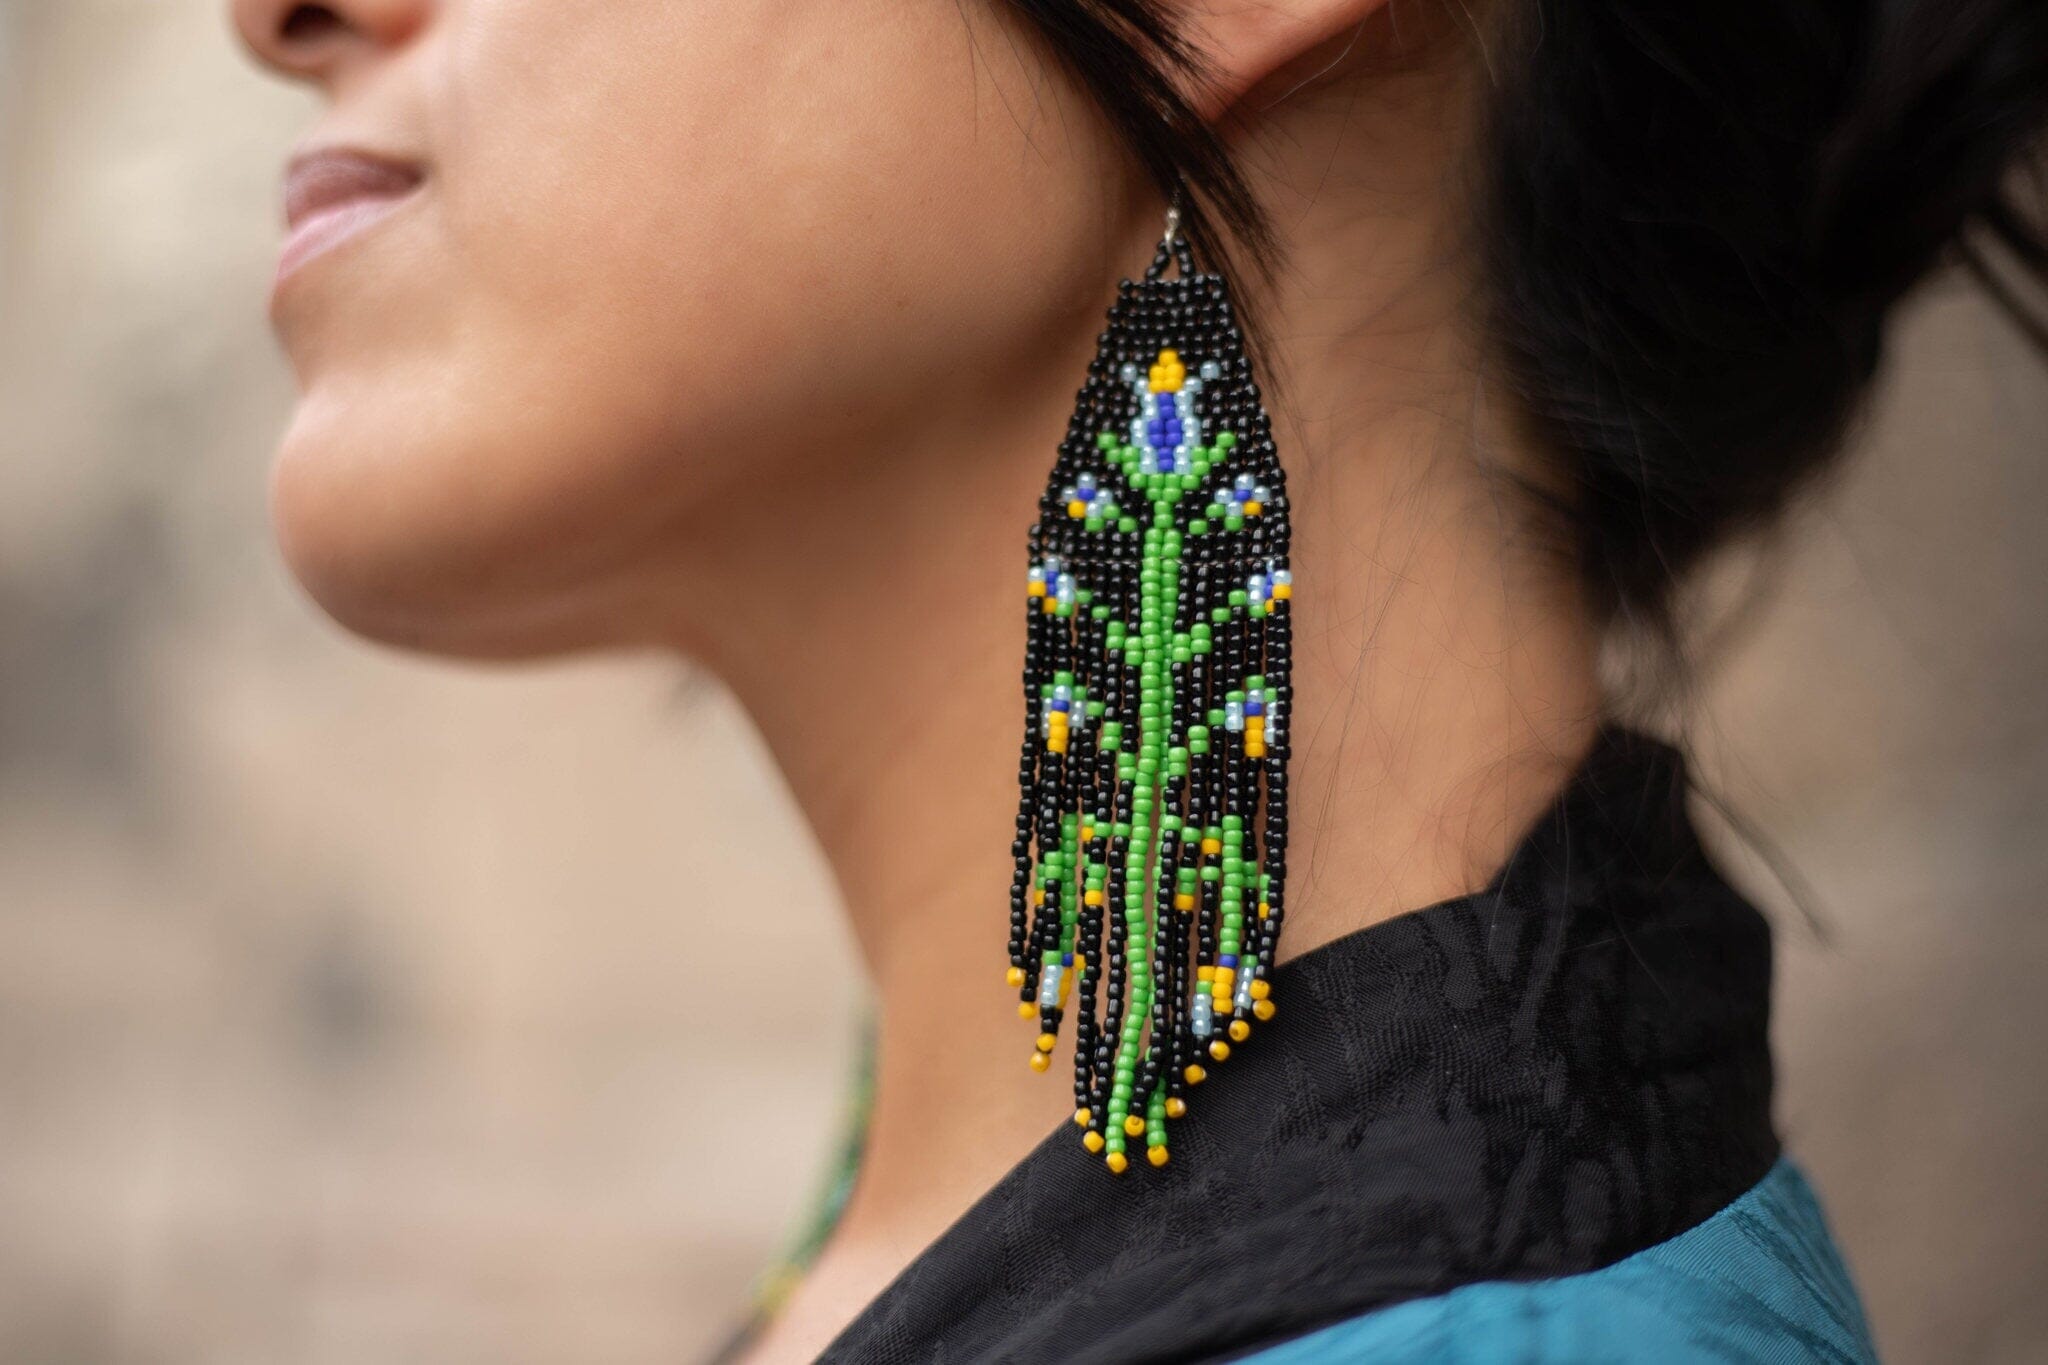 Black Flowerbug Earring Mother Sierra - Unique high-quality bead earrings